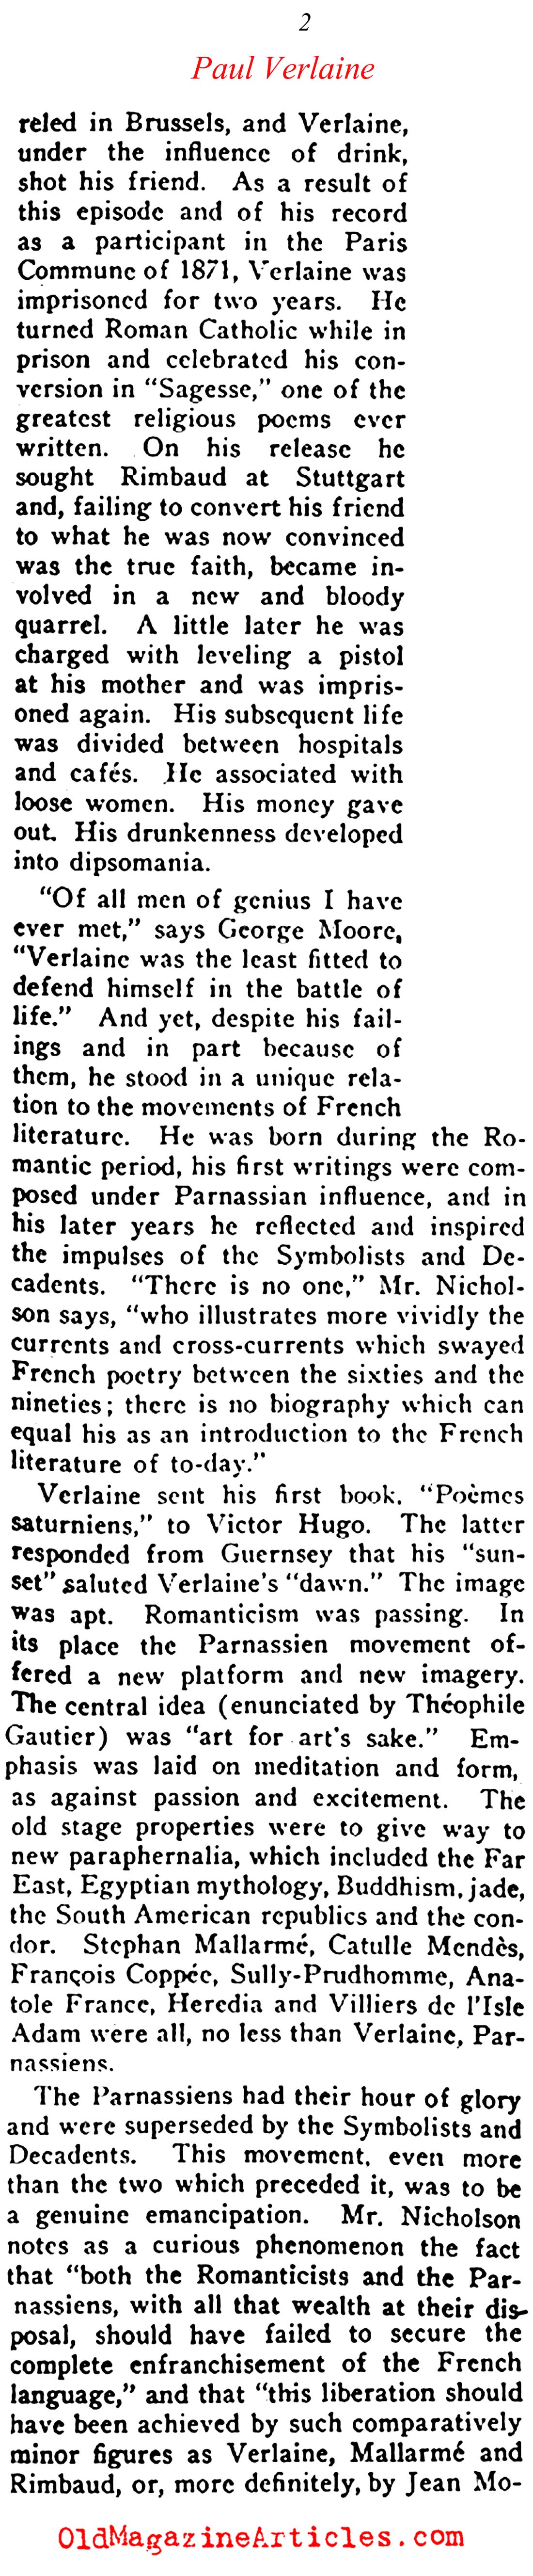 Harold Nicolson on Paul Verlaine (Current Opinion, 1921)